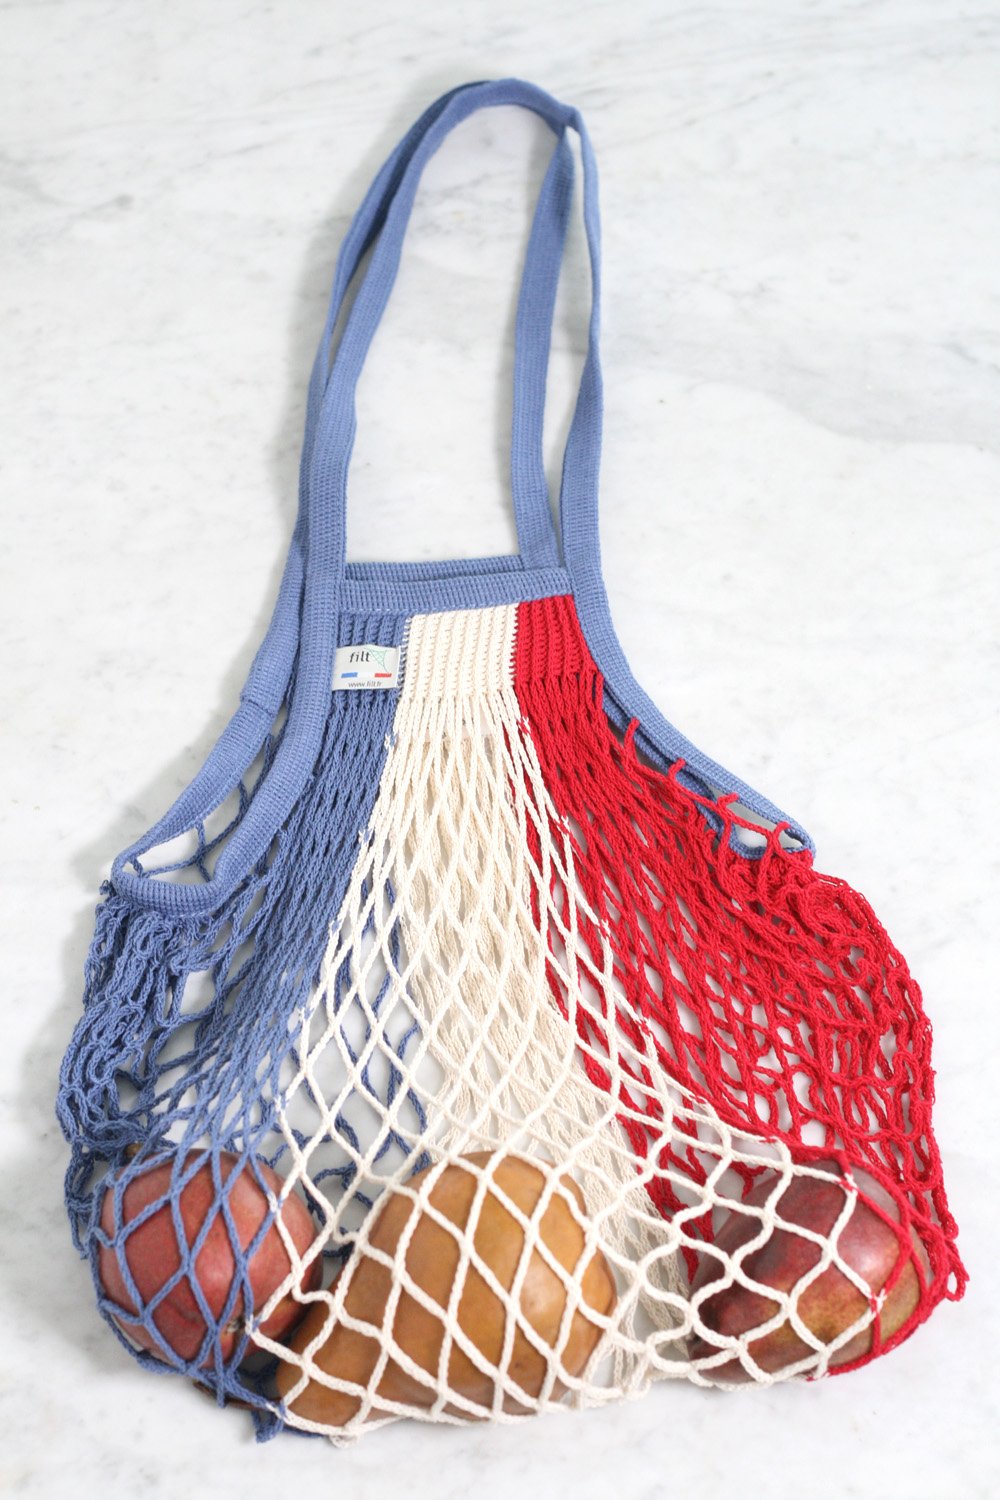 Filt French Market Net Bag Red White Blue - Made in France